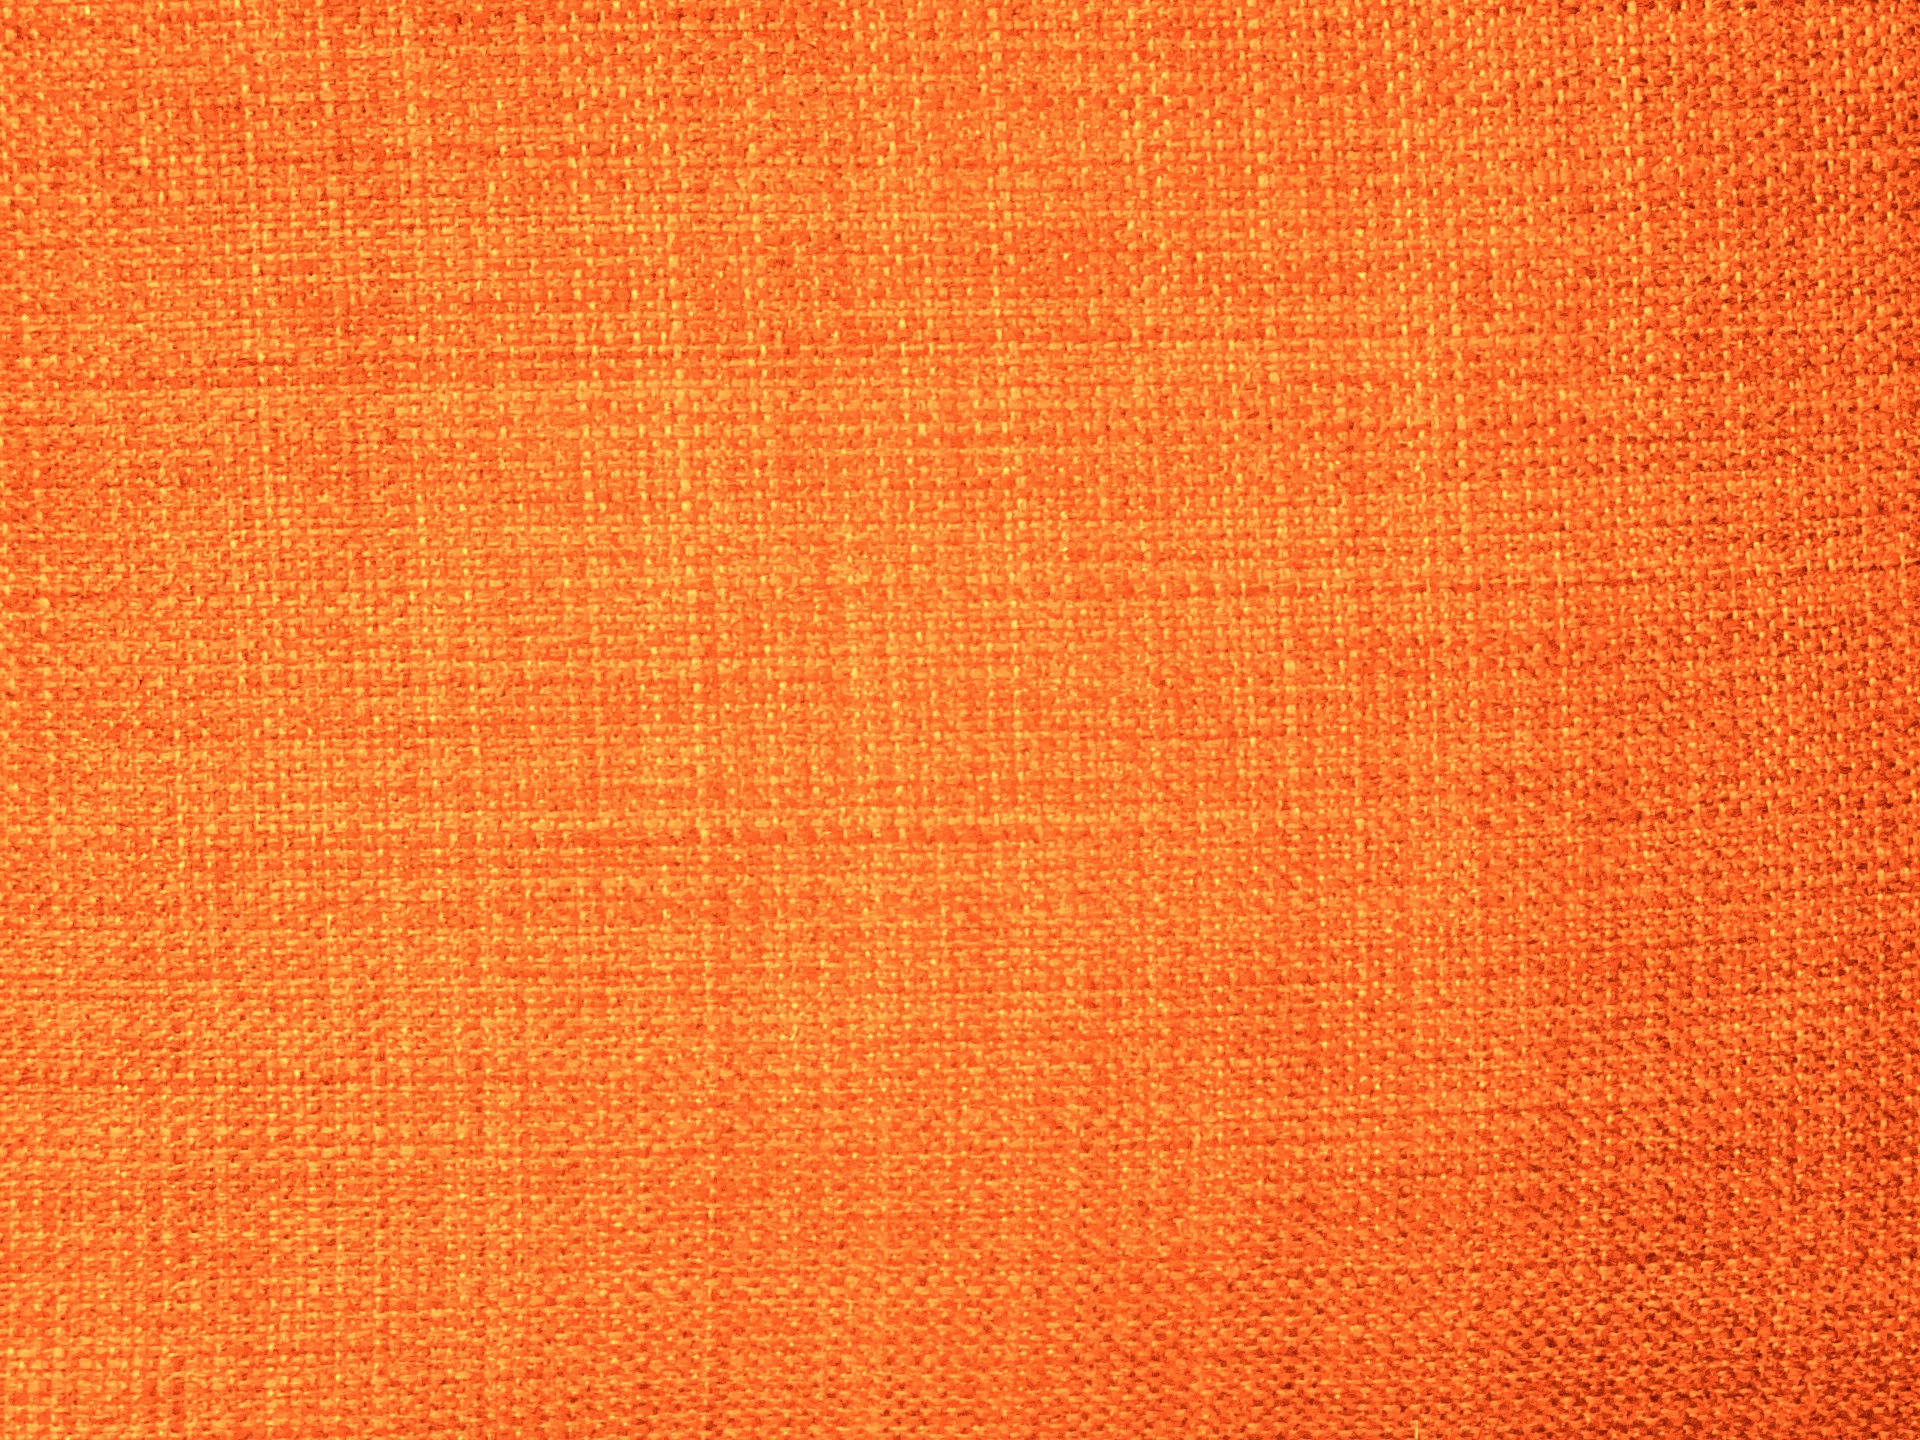 orange-fabric-textured-background-free-stock-photo-public-domain-pictures